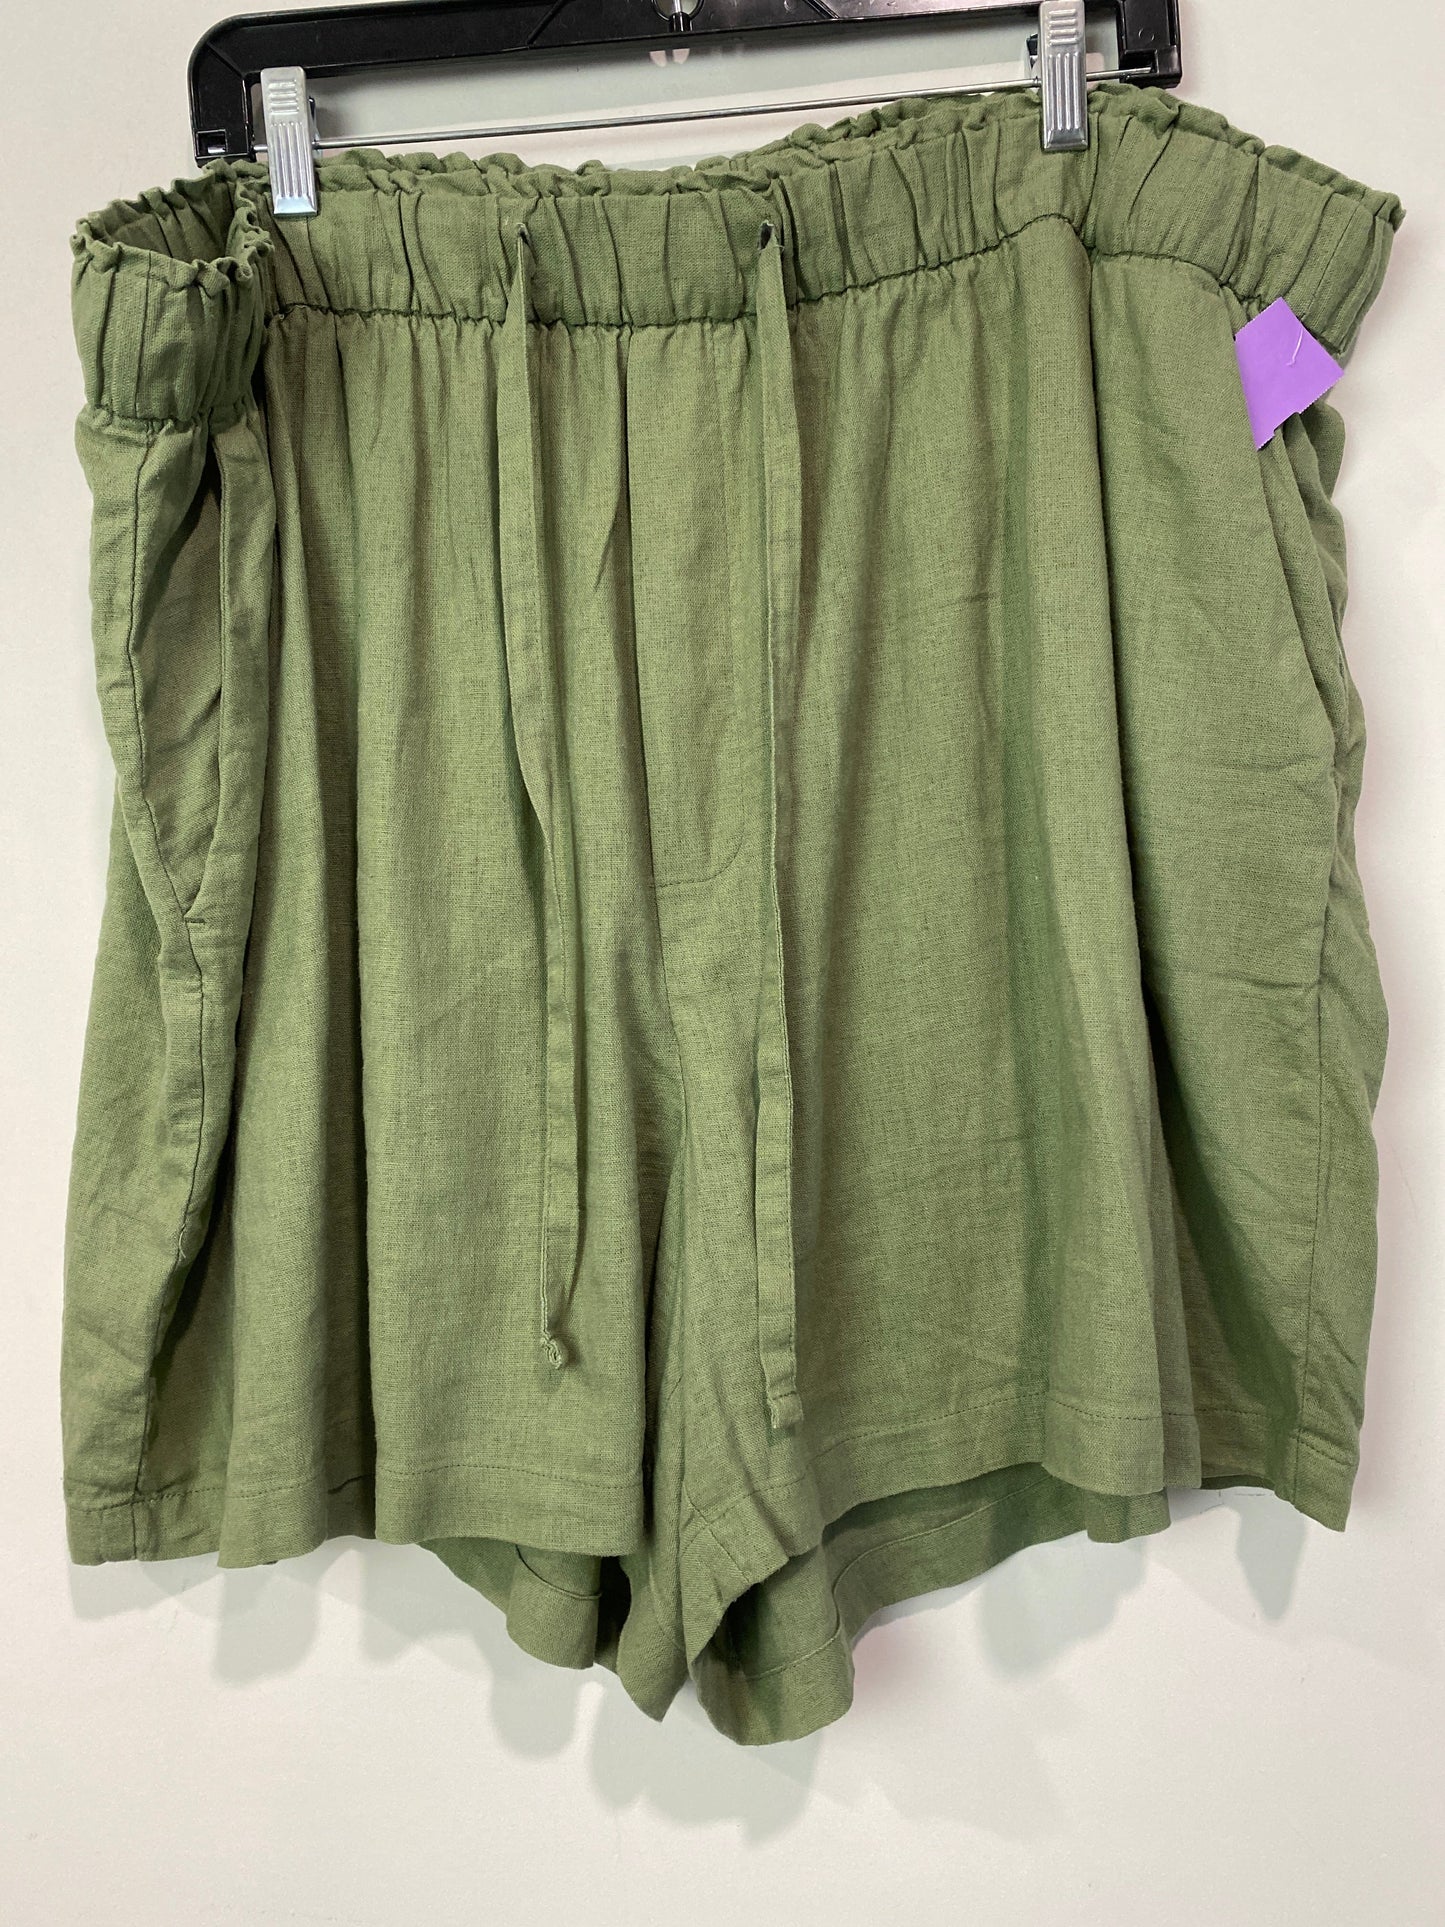 Green Shorts Ava & Viv, Size 2x